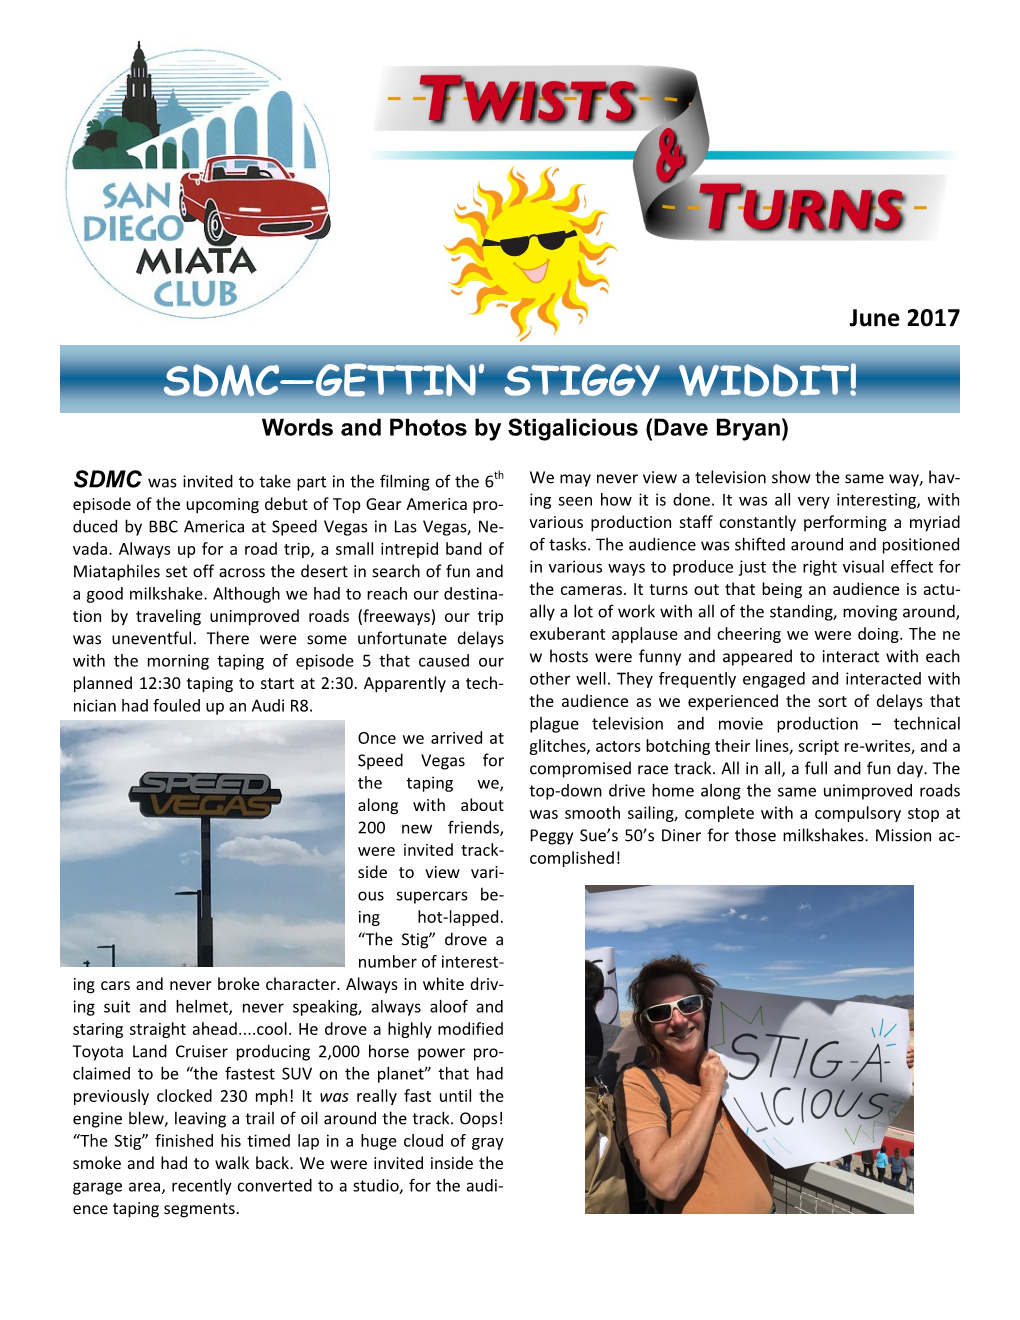 Sdmc—Gettin' Stiggy Widdit!